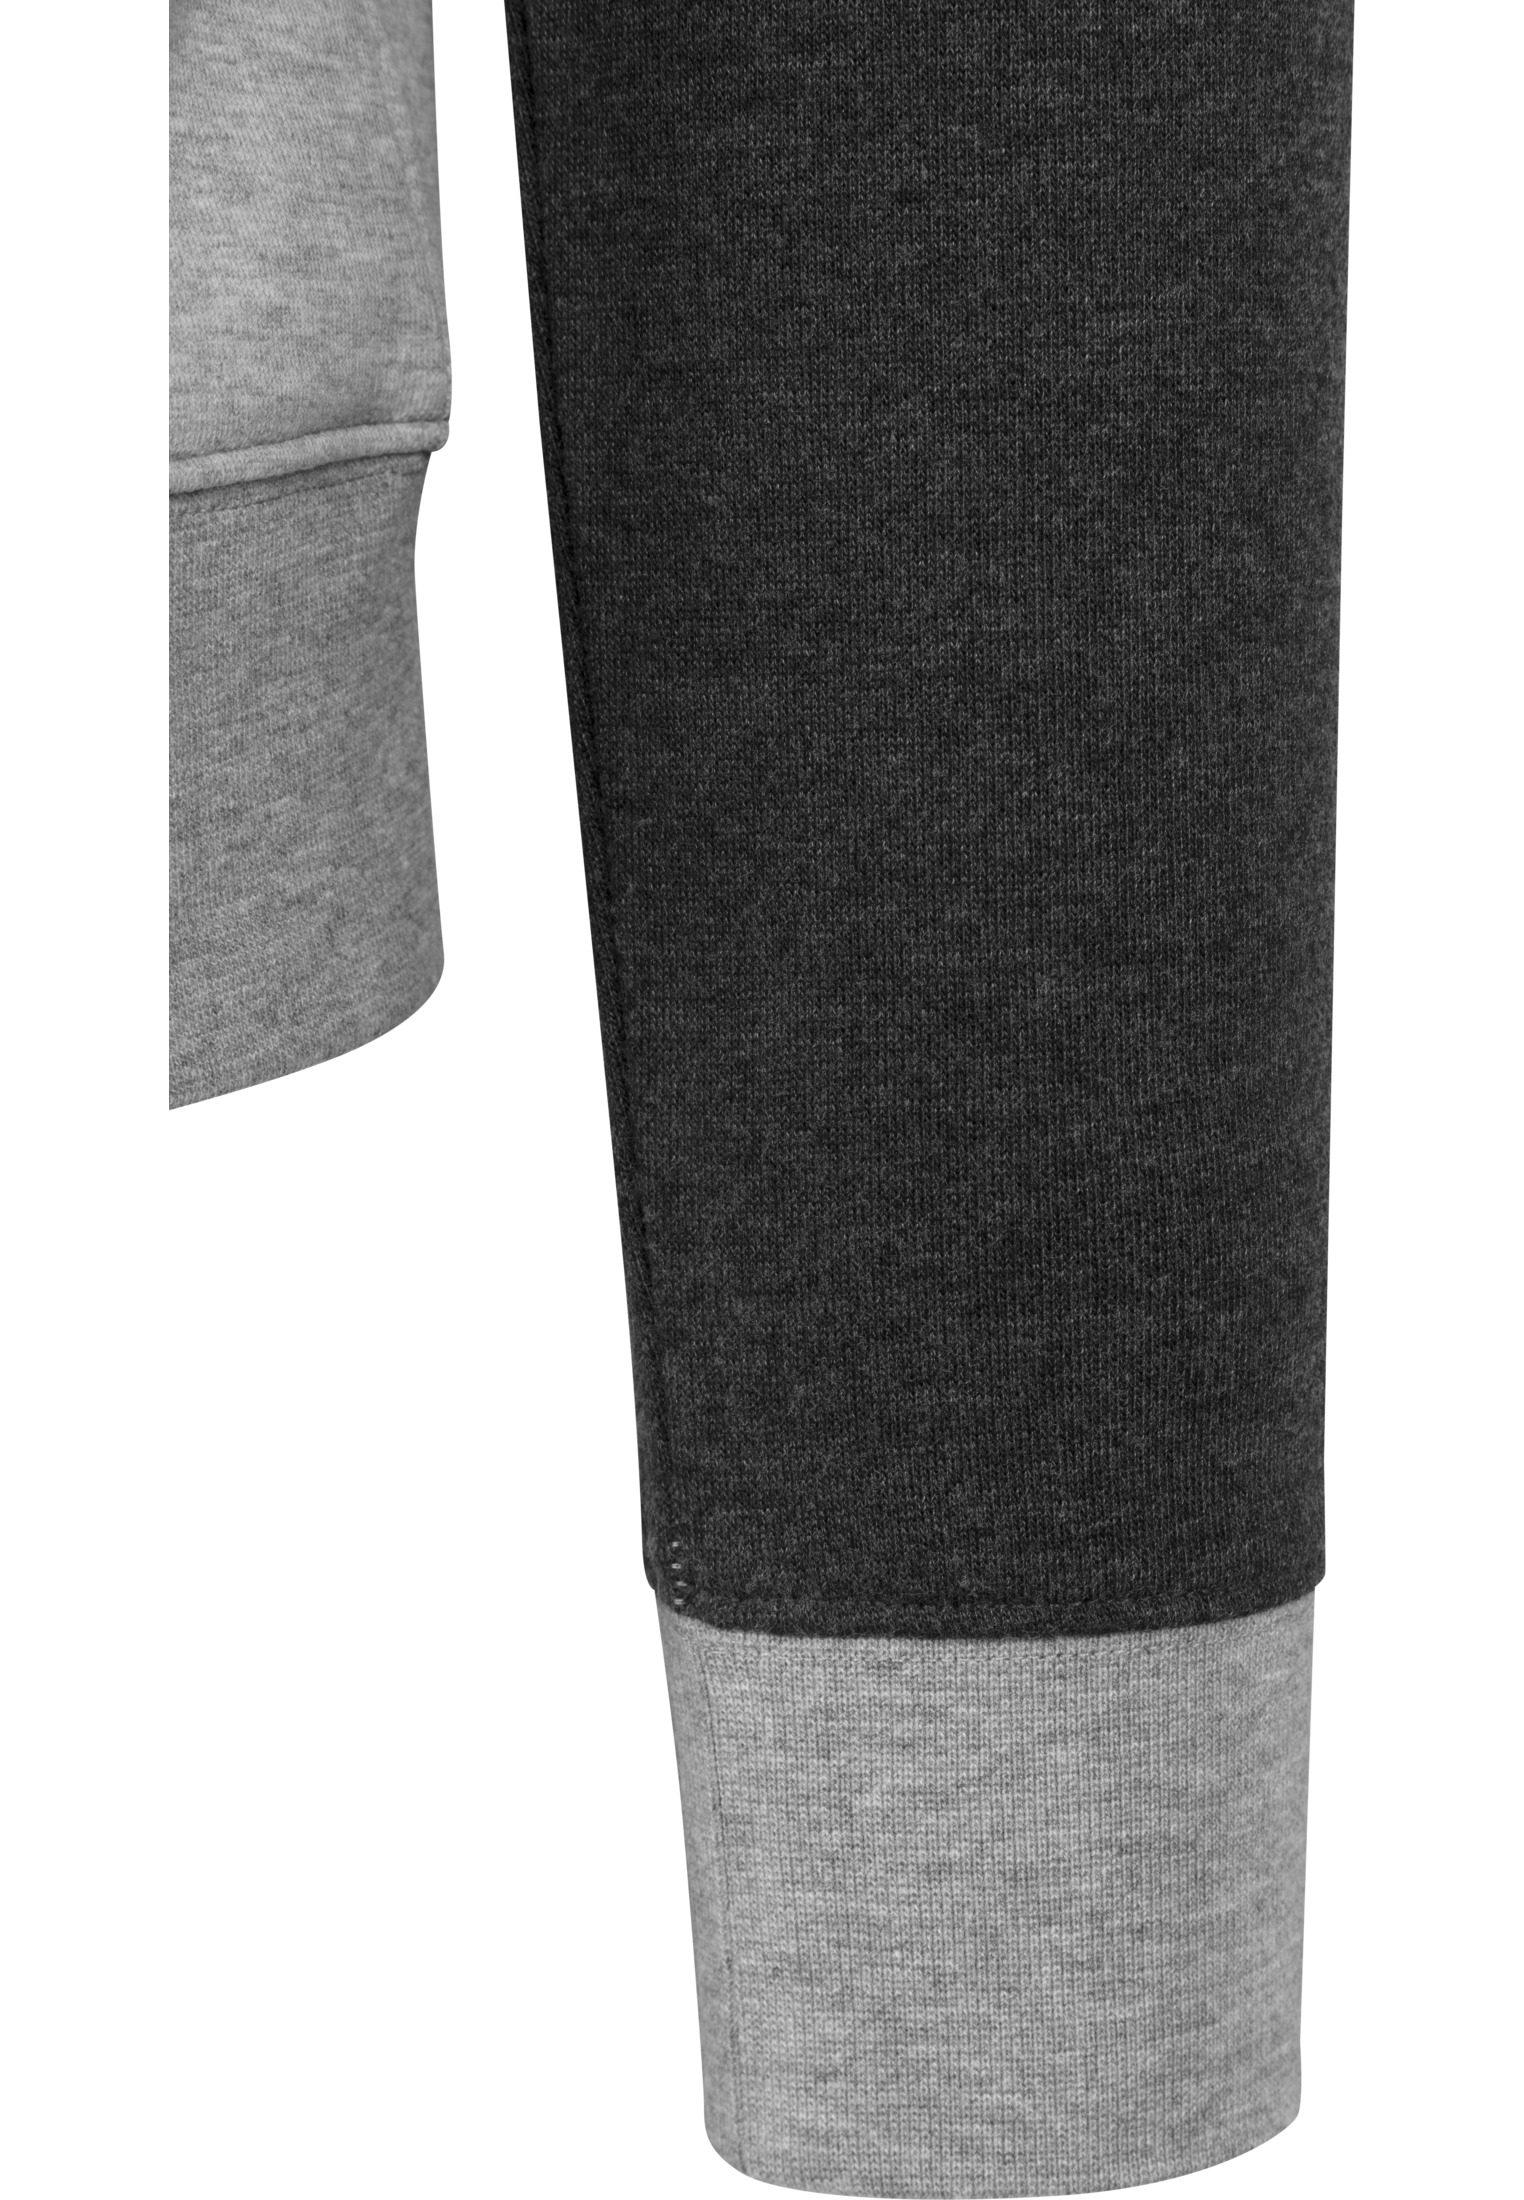 Zip Hoodies 3- Tone Sweat Zip Hoody in Farbe black/grey/charcoal